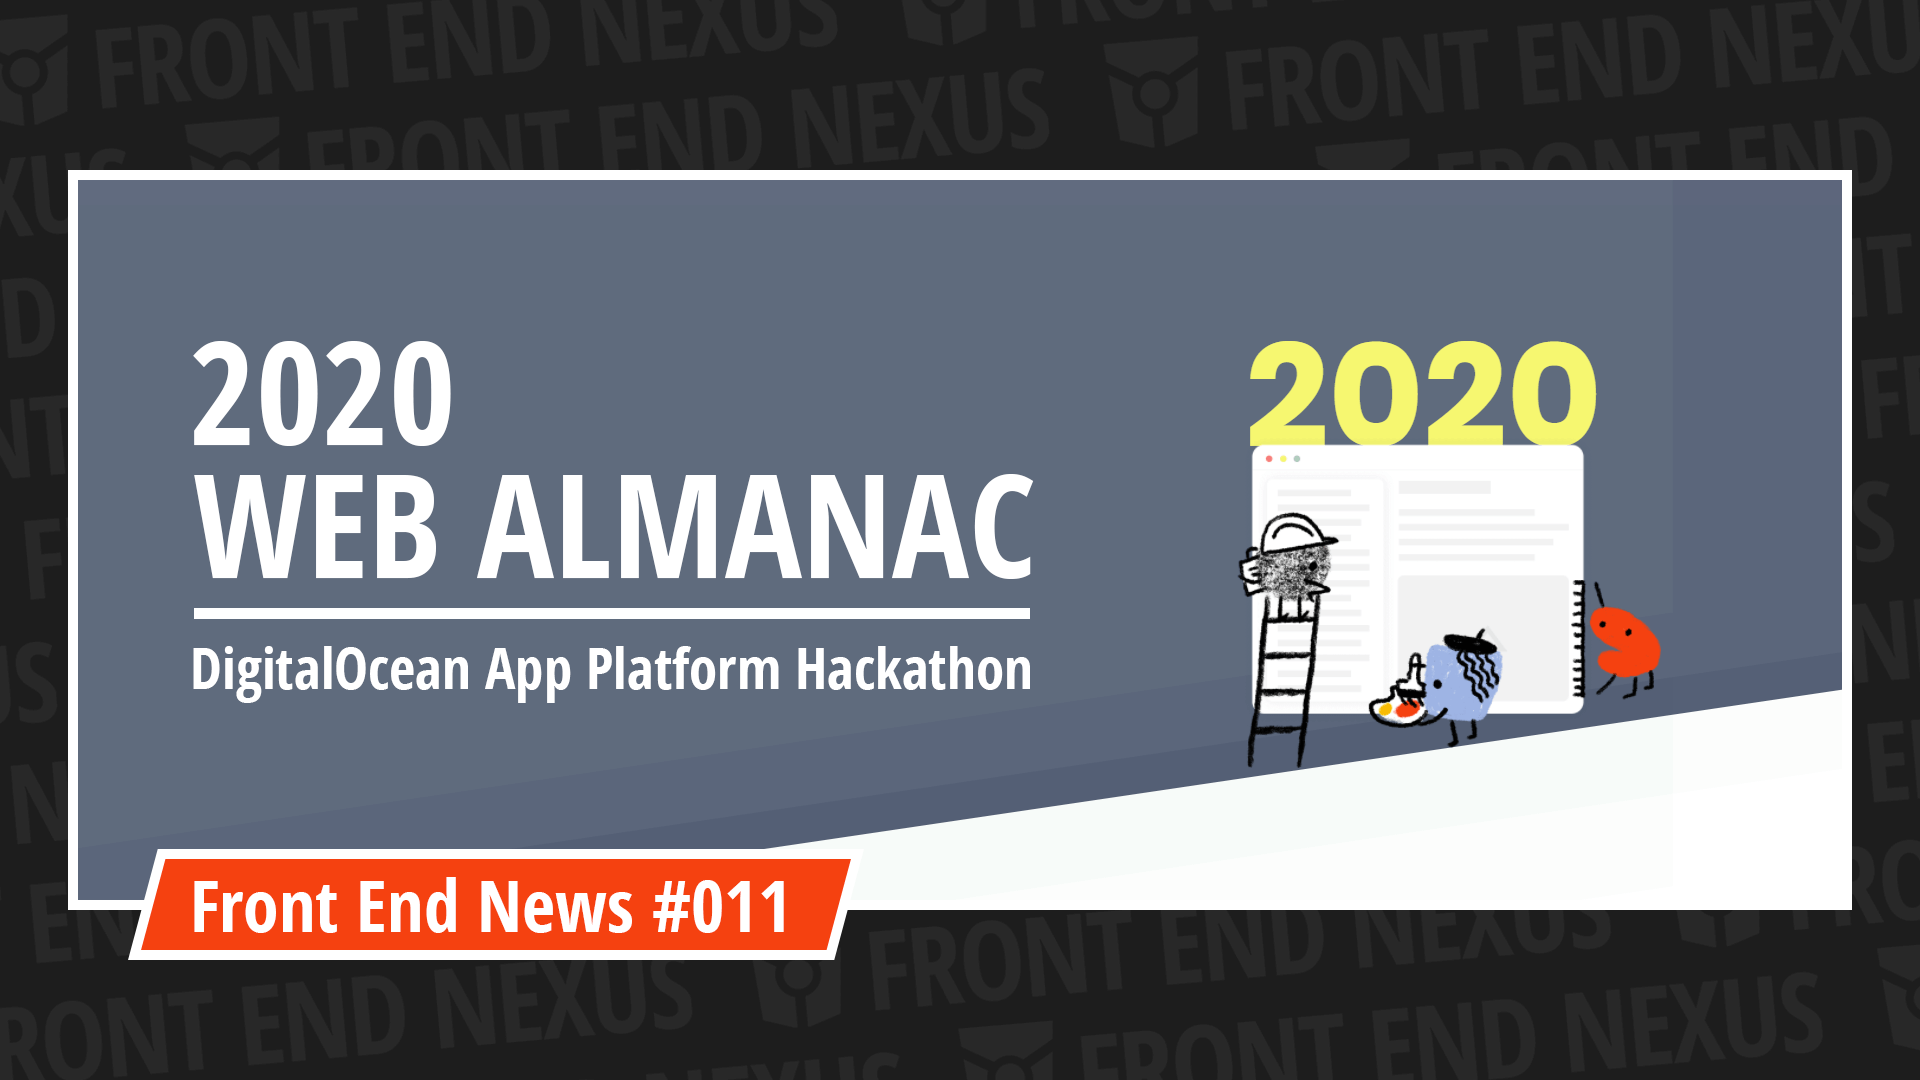 Web Almanac 2020 and the DigitalOcean App Platform Hackathon | Front End News #011